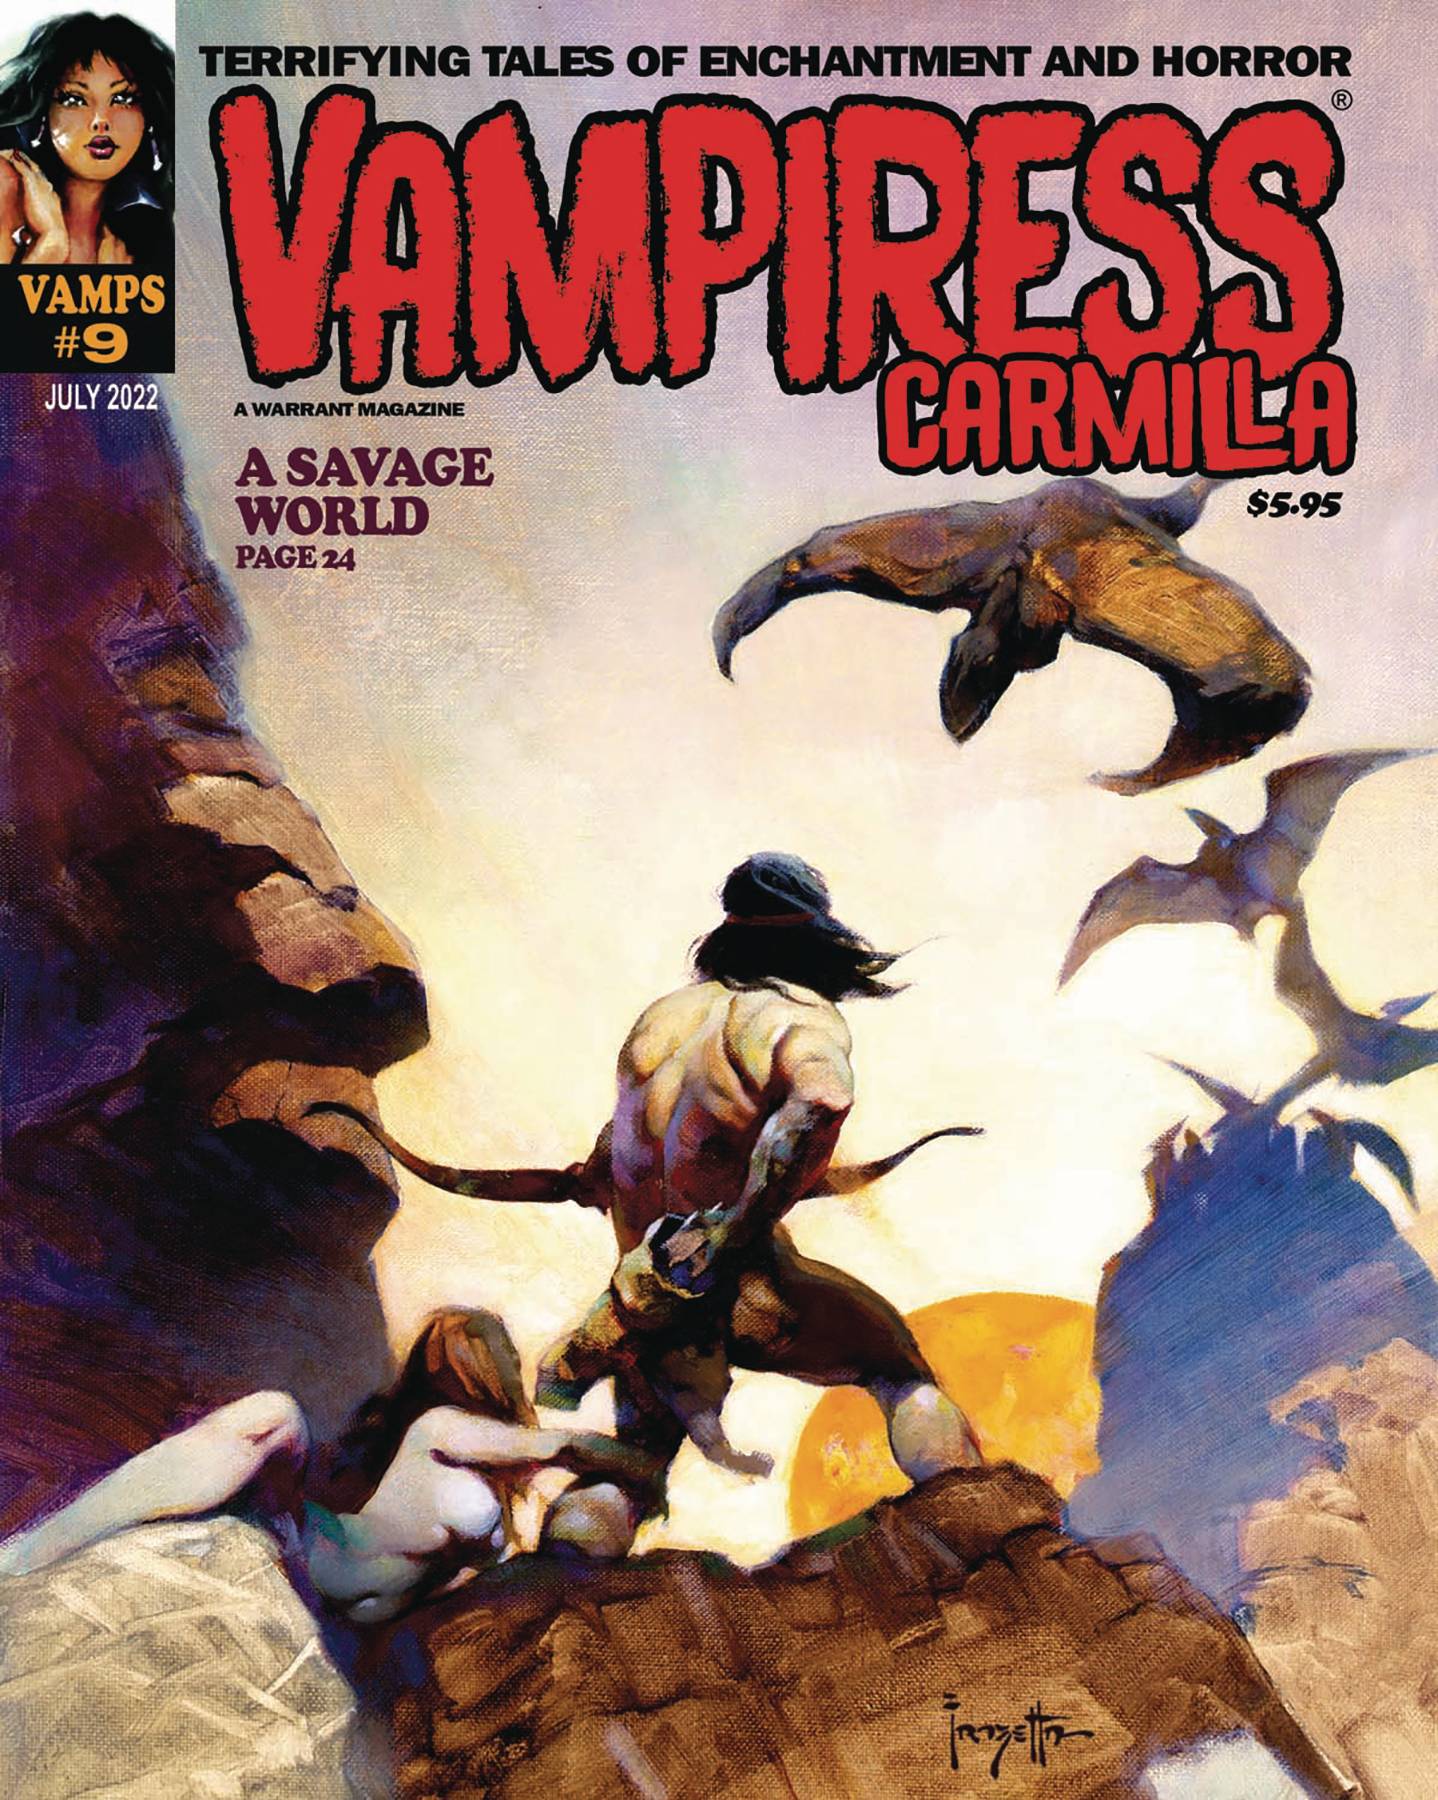 VAMPIRESS CARMILLA MAGAZINE #9 (MR)